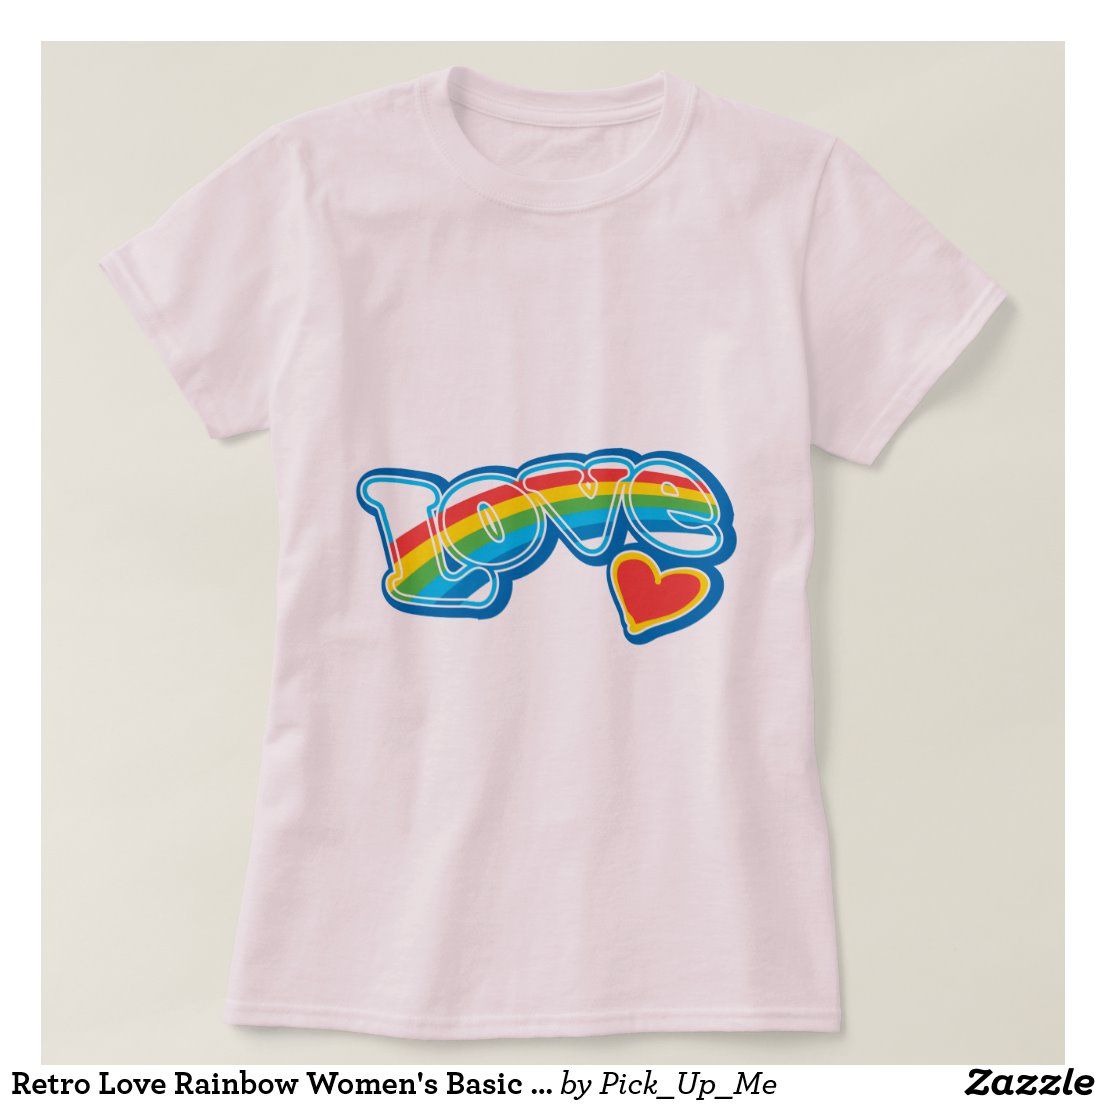 Retro Love Rainbow Tee
❤️
Find it here ->  buff.ly/39Fyscj
❤️
#valentinestshirt #gifttshirt #lovetshirt #graphictshirt #valentinesgiftideas #valentine #valentinesday #love #valentinesideas #valentines2020 #tshirt #valentinestee #retro #retrotee #retrovalentines